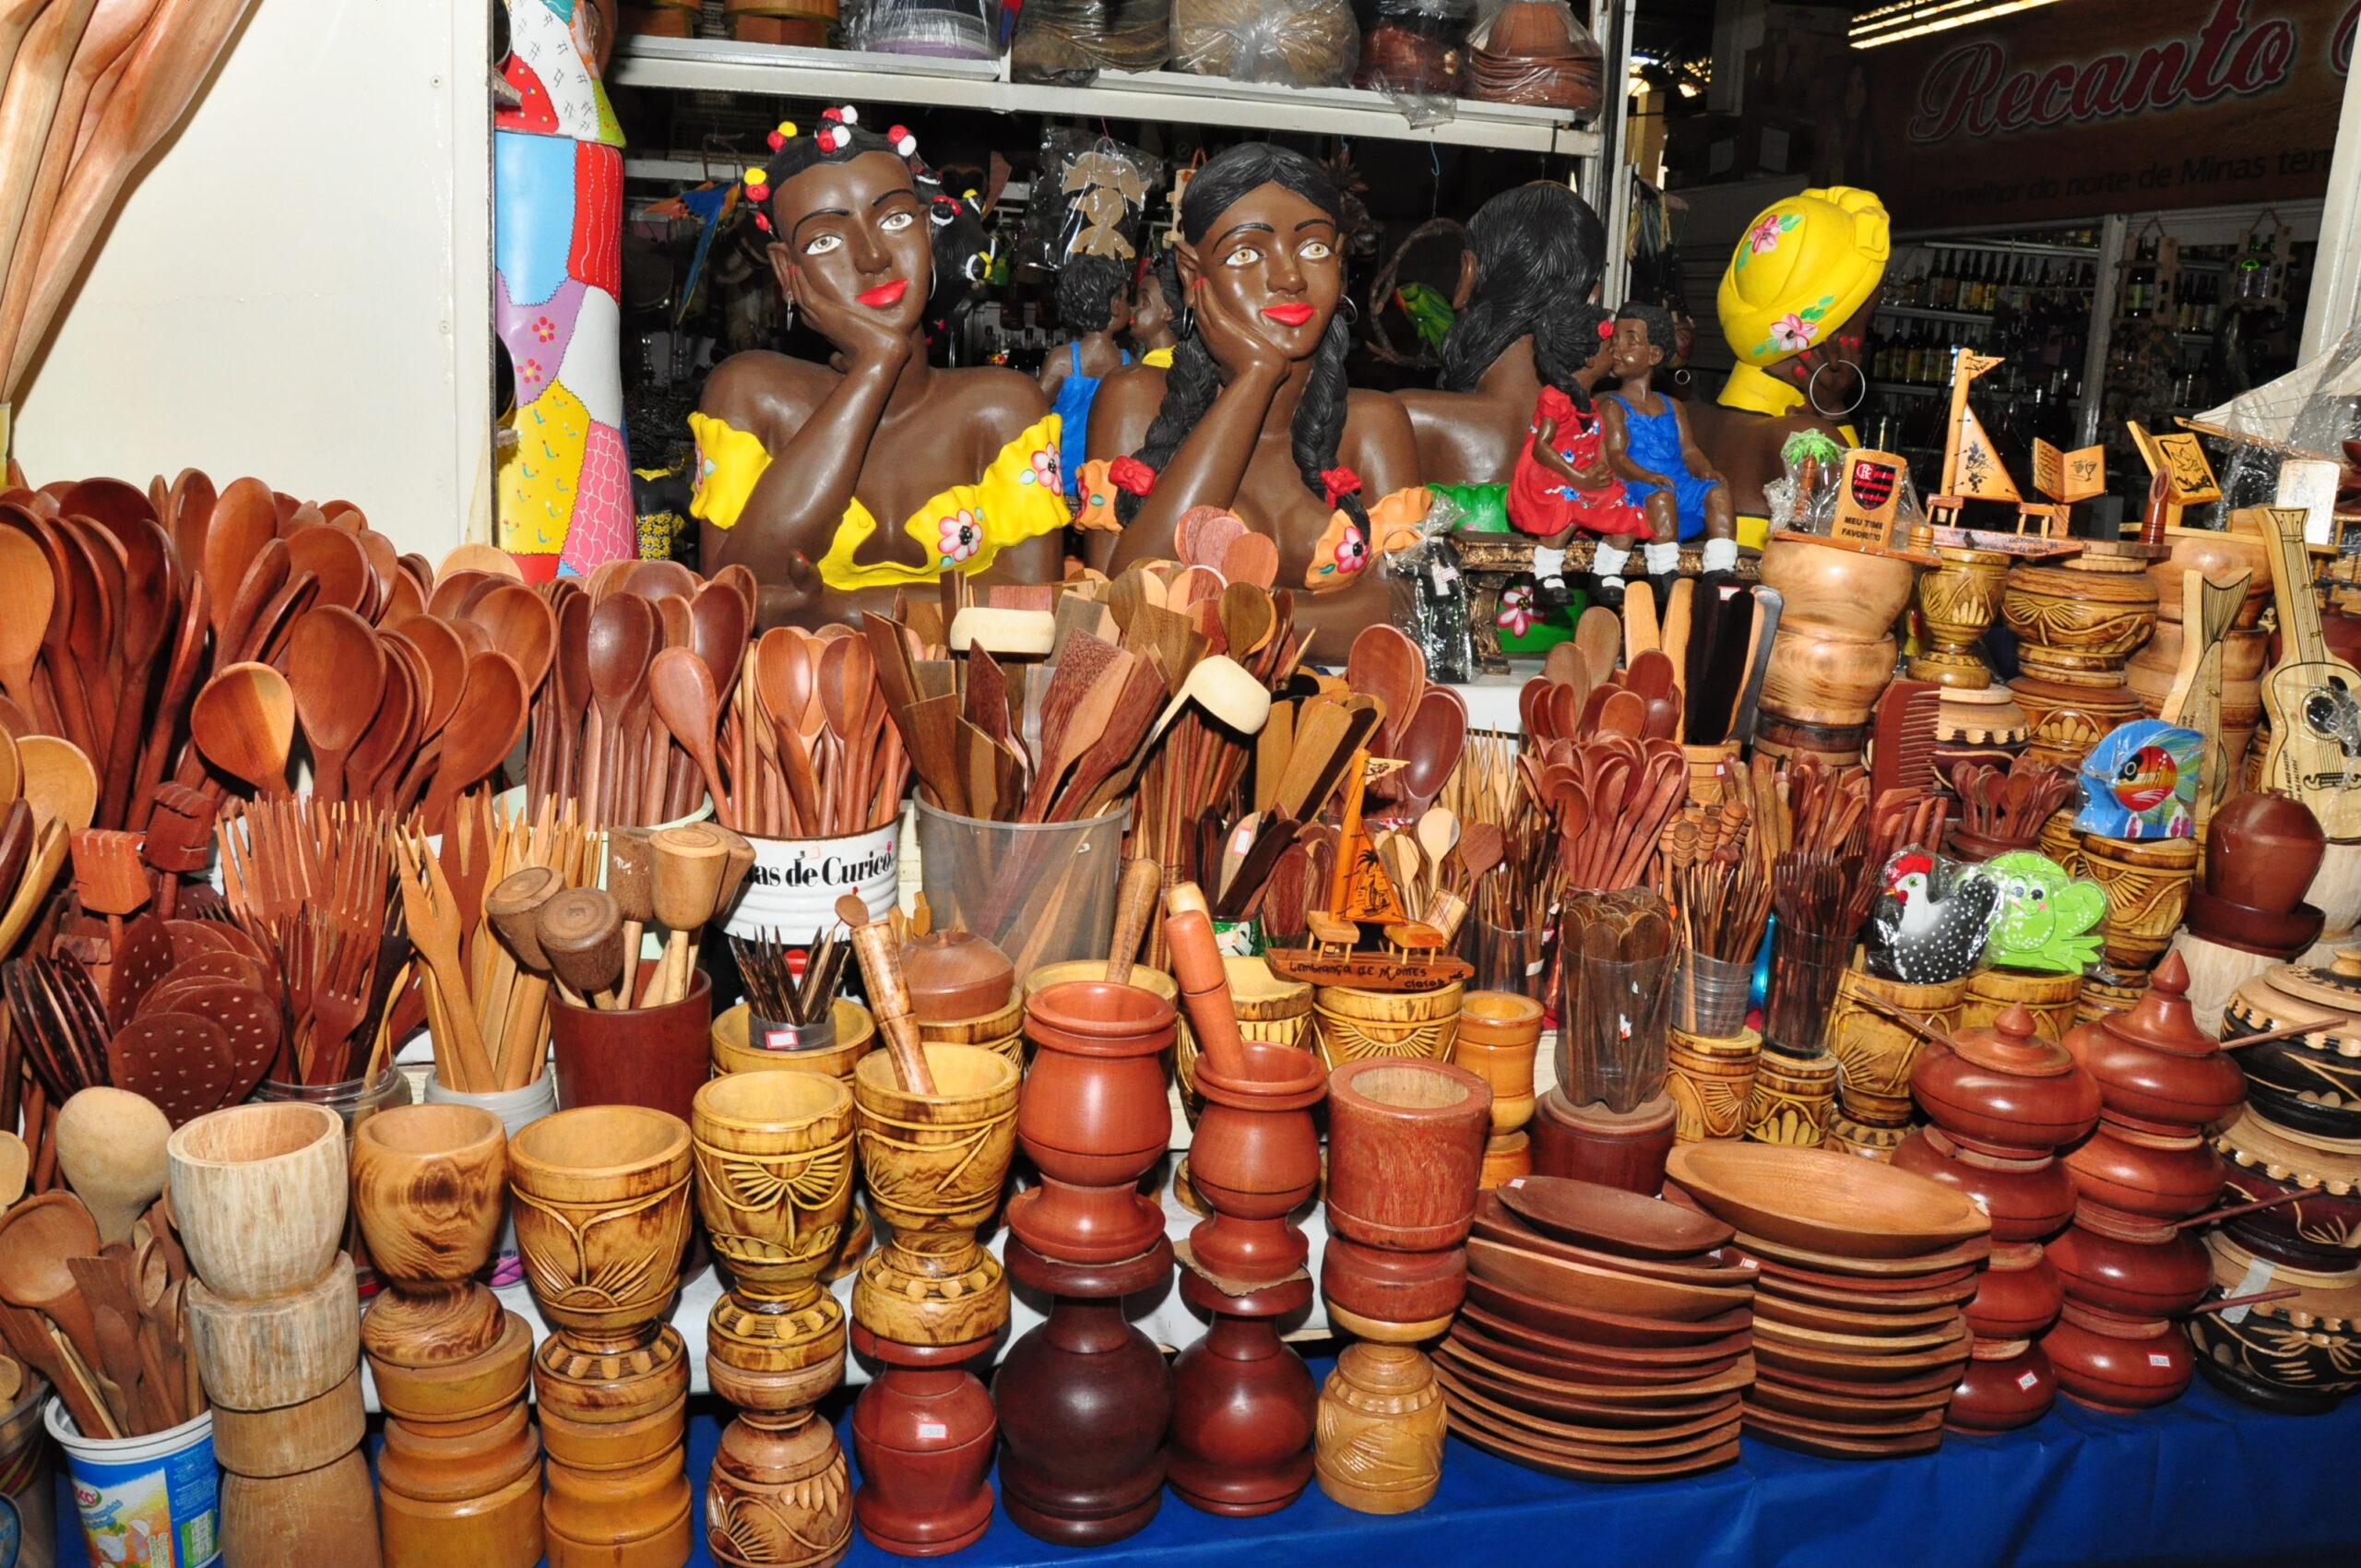 MONTES CLAROS | Liberada a venda de artesanato nas feiras livres